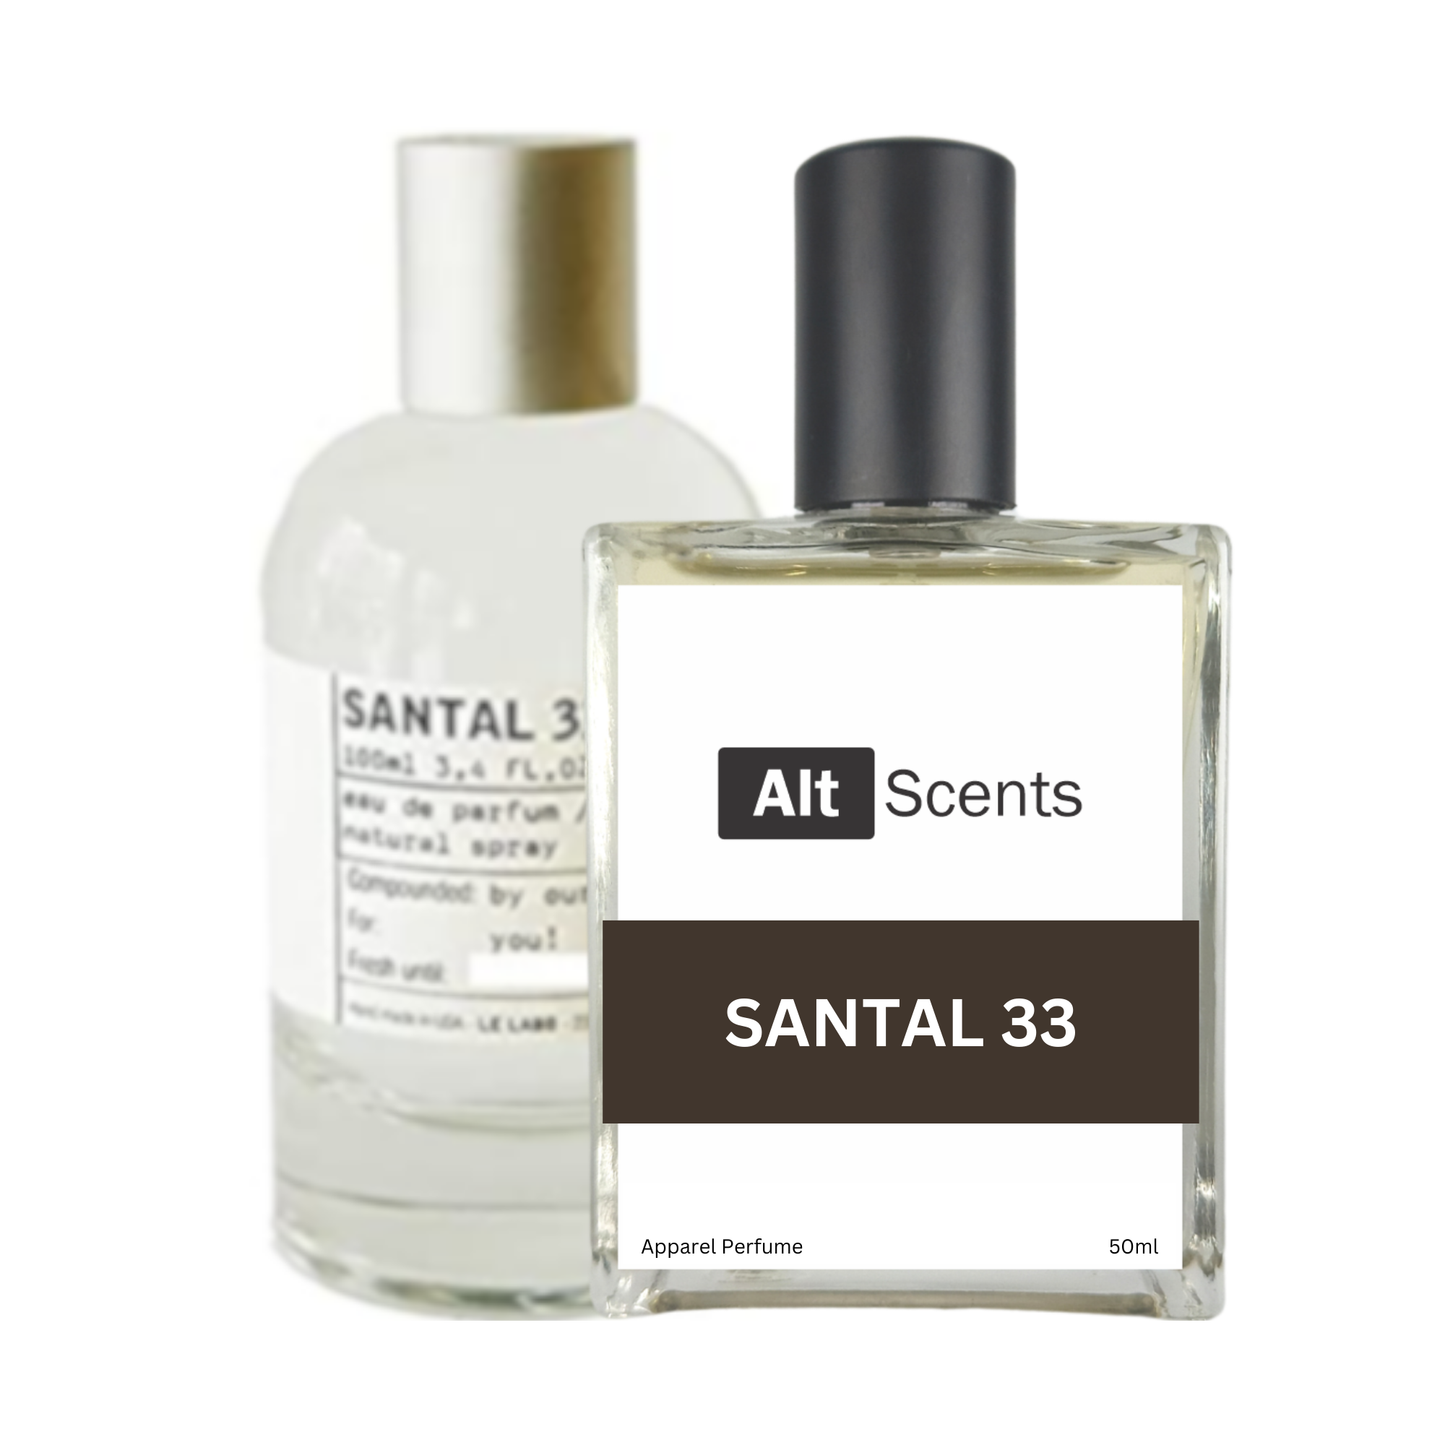 Altscents X Le L*bo Santal 33 Perfume